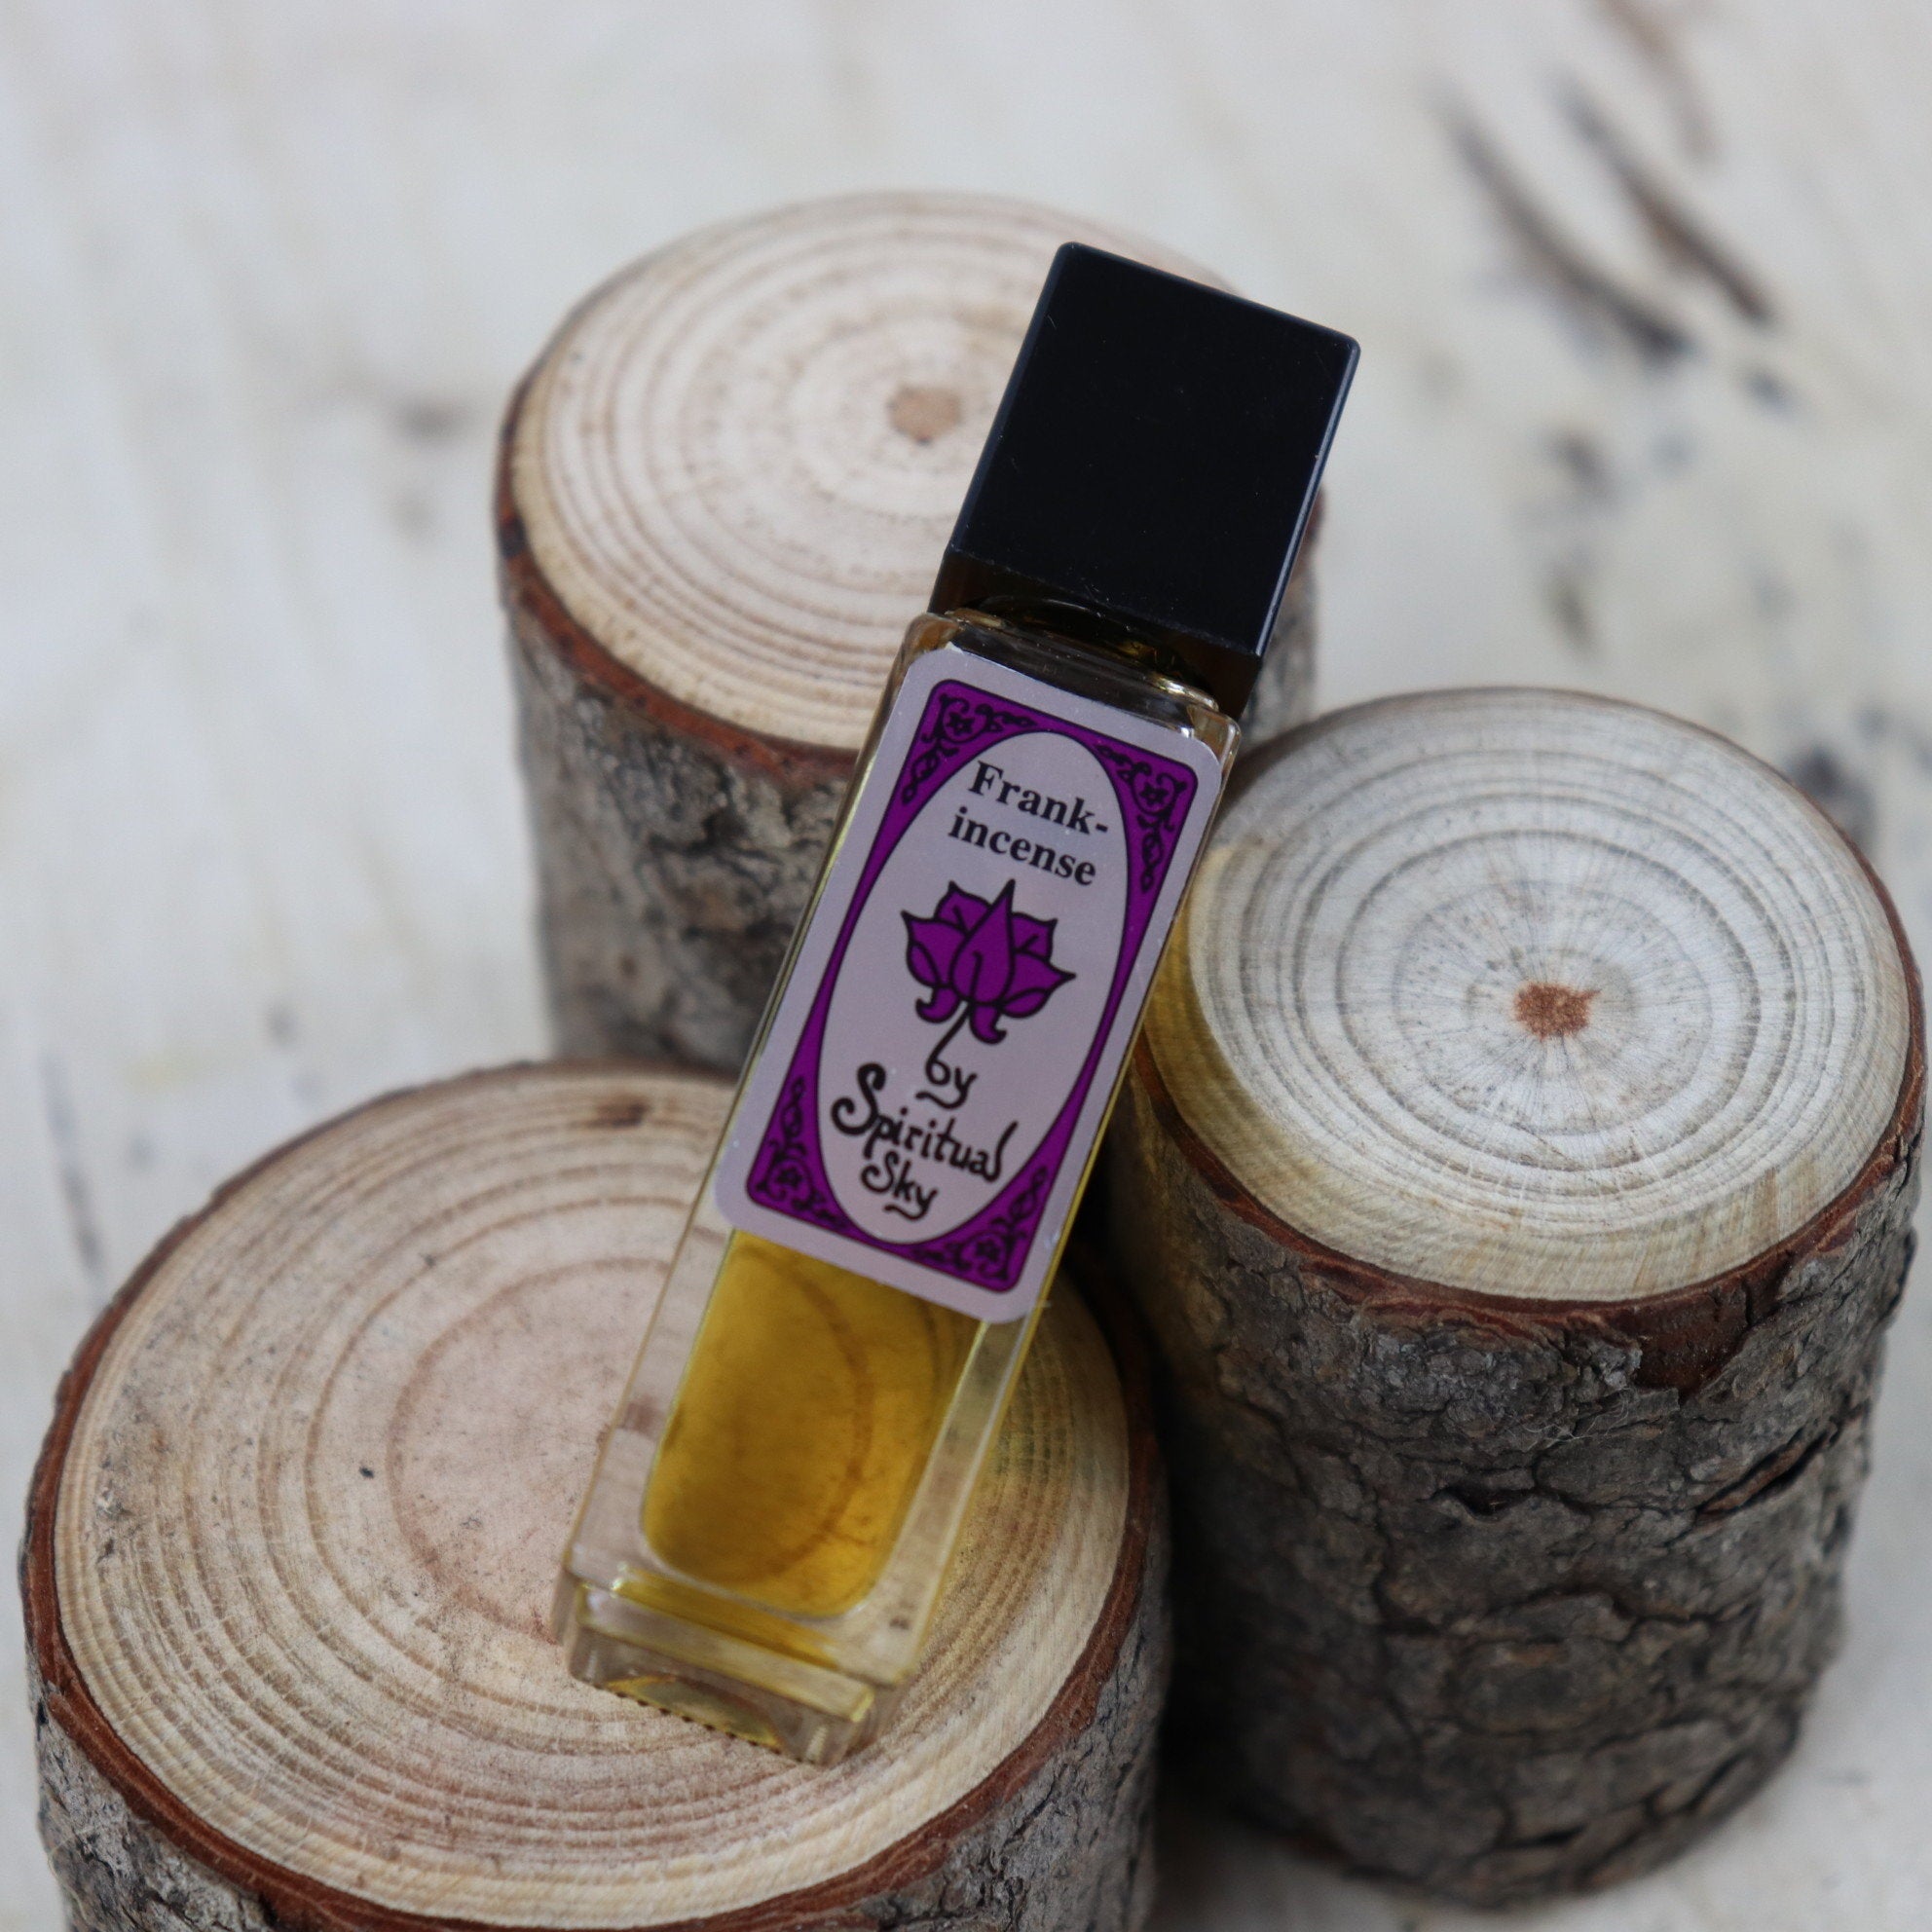 Spiritual Sky Perfume Oil- Frankincense - The Spirit of Life